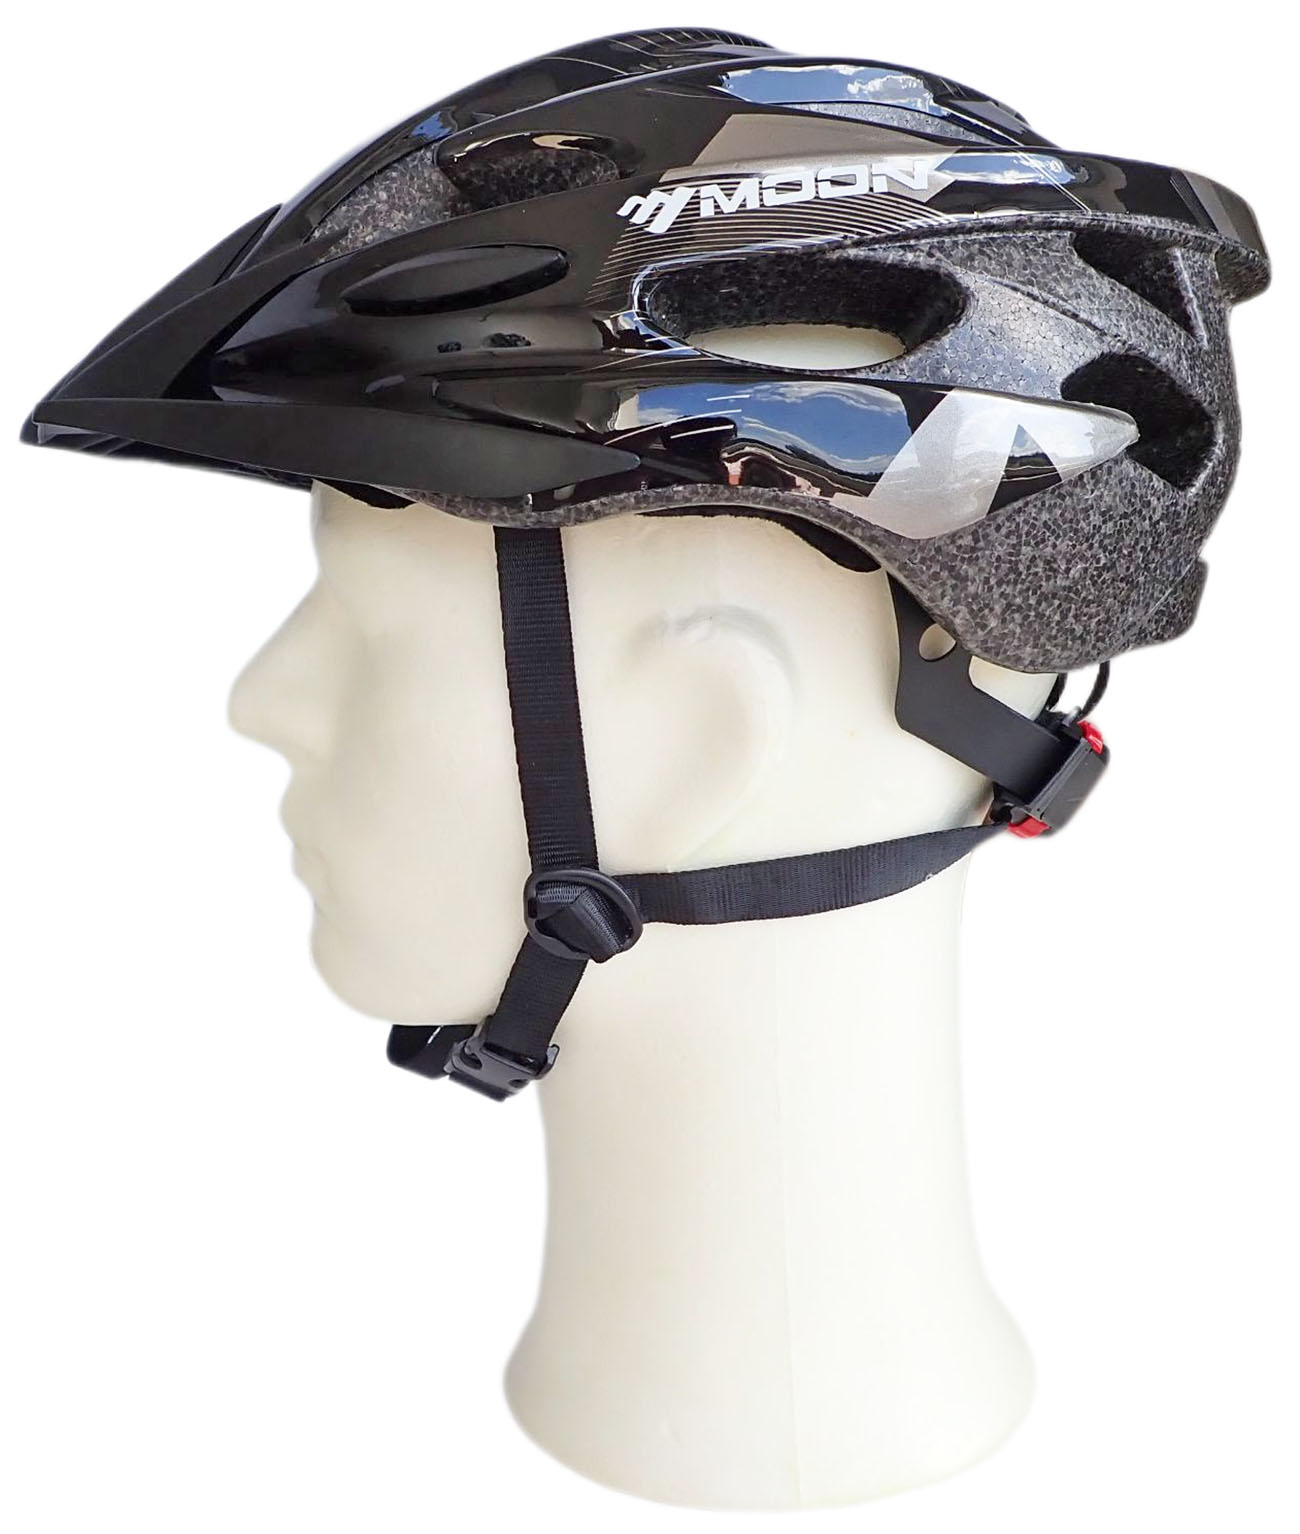 CSH30B-M černá cyklistická helma velikost M (55-58cm) 2018